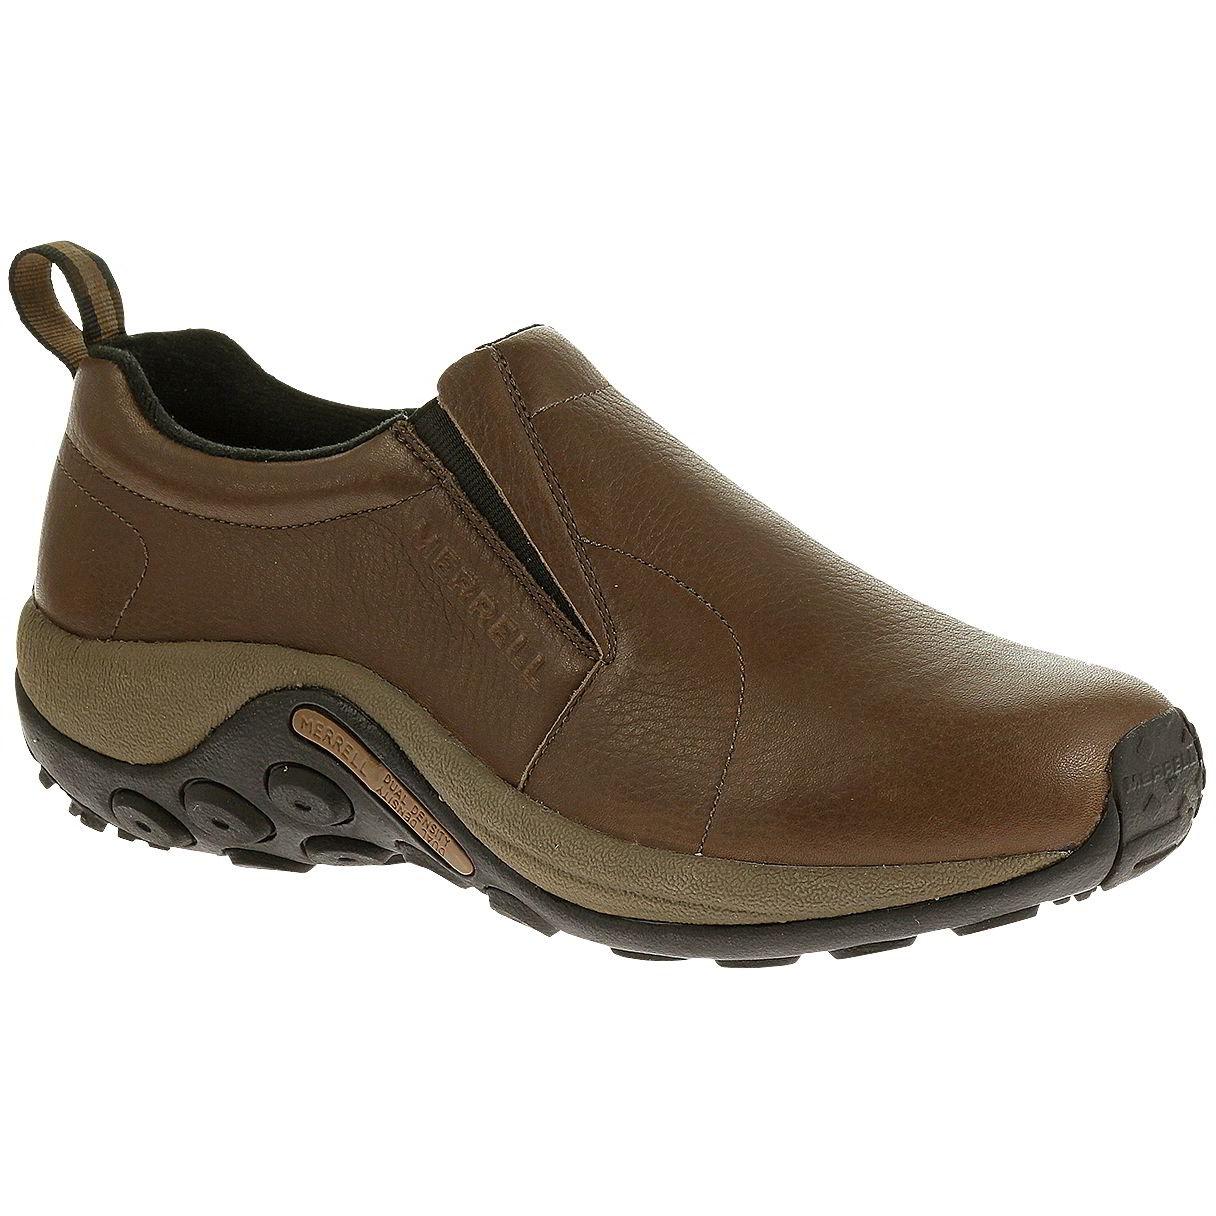 Merrell Mens Jungle Moc Leather Slip On Walking Shoes - UK 9.5